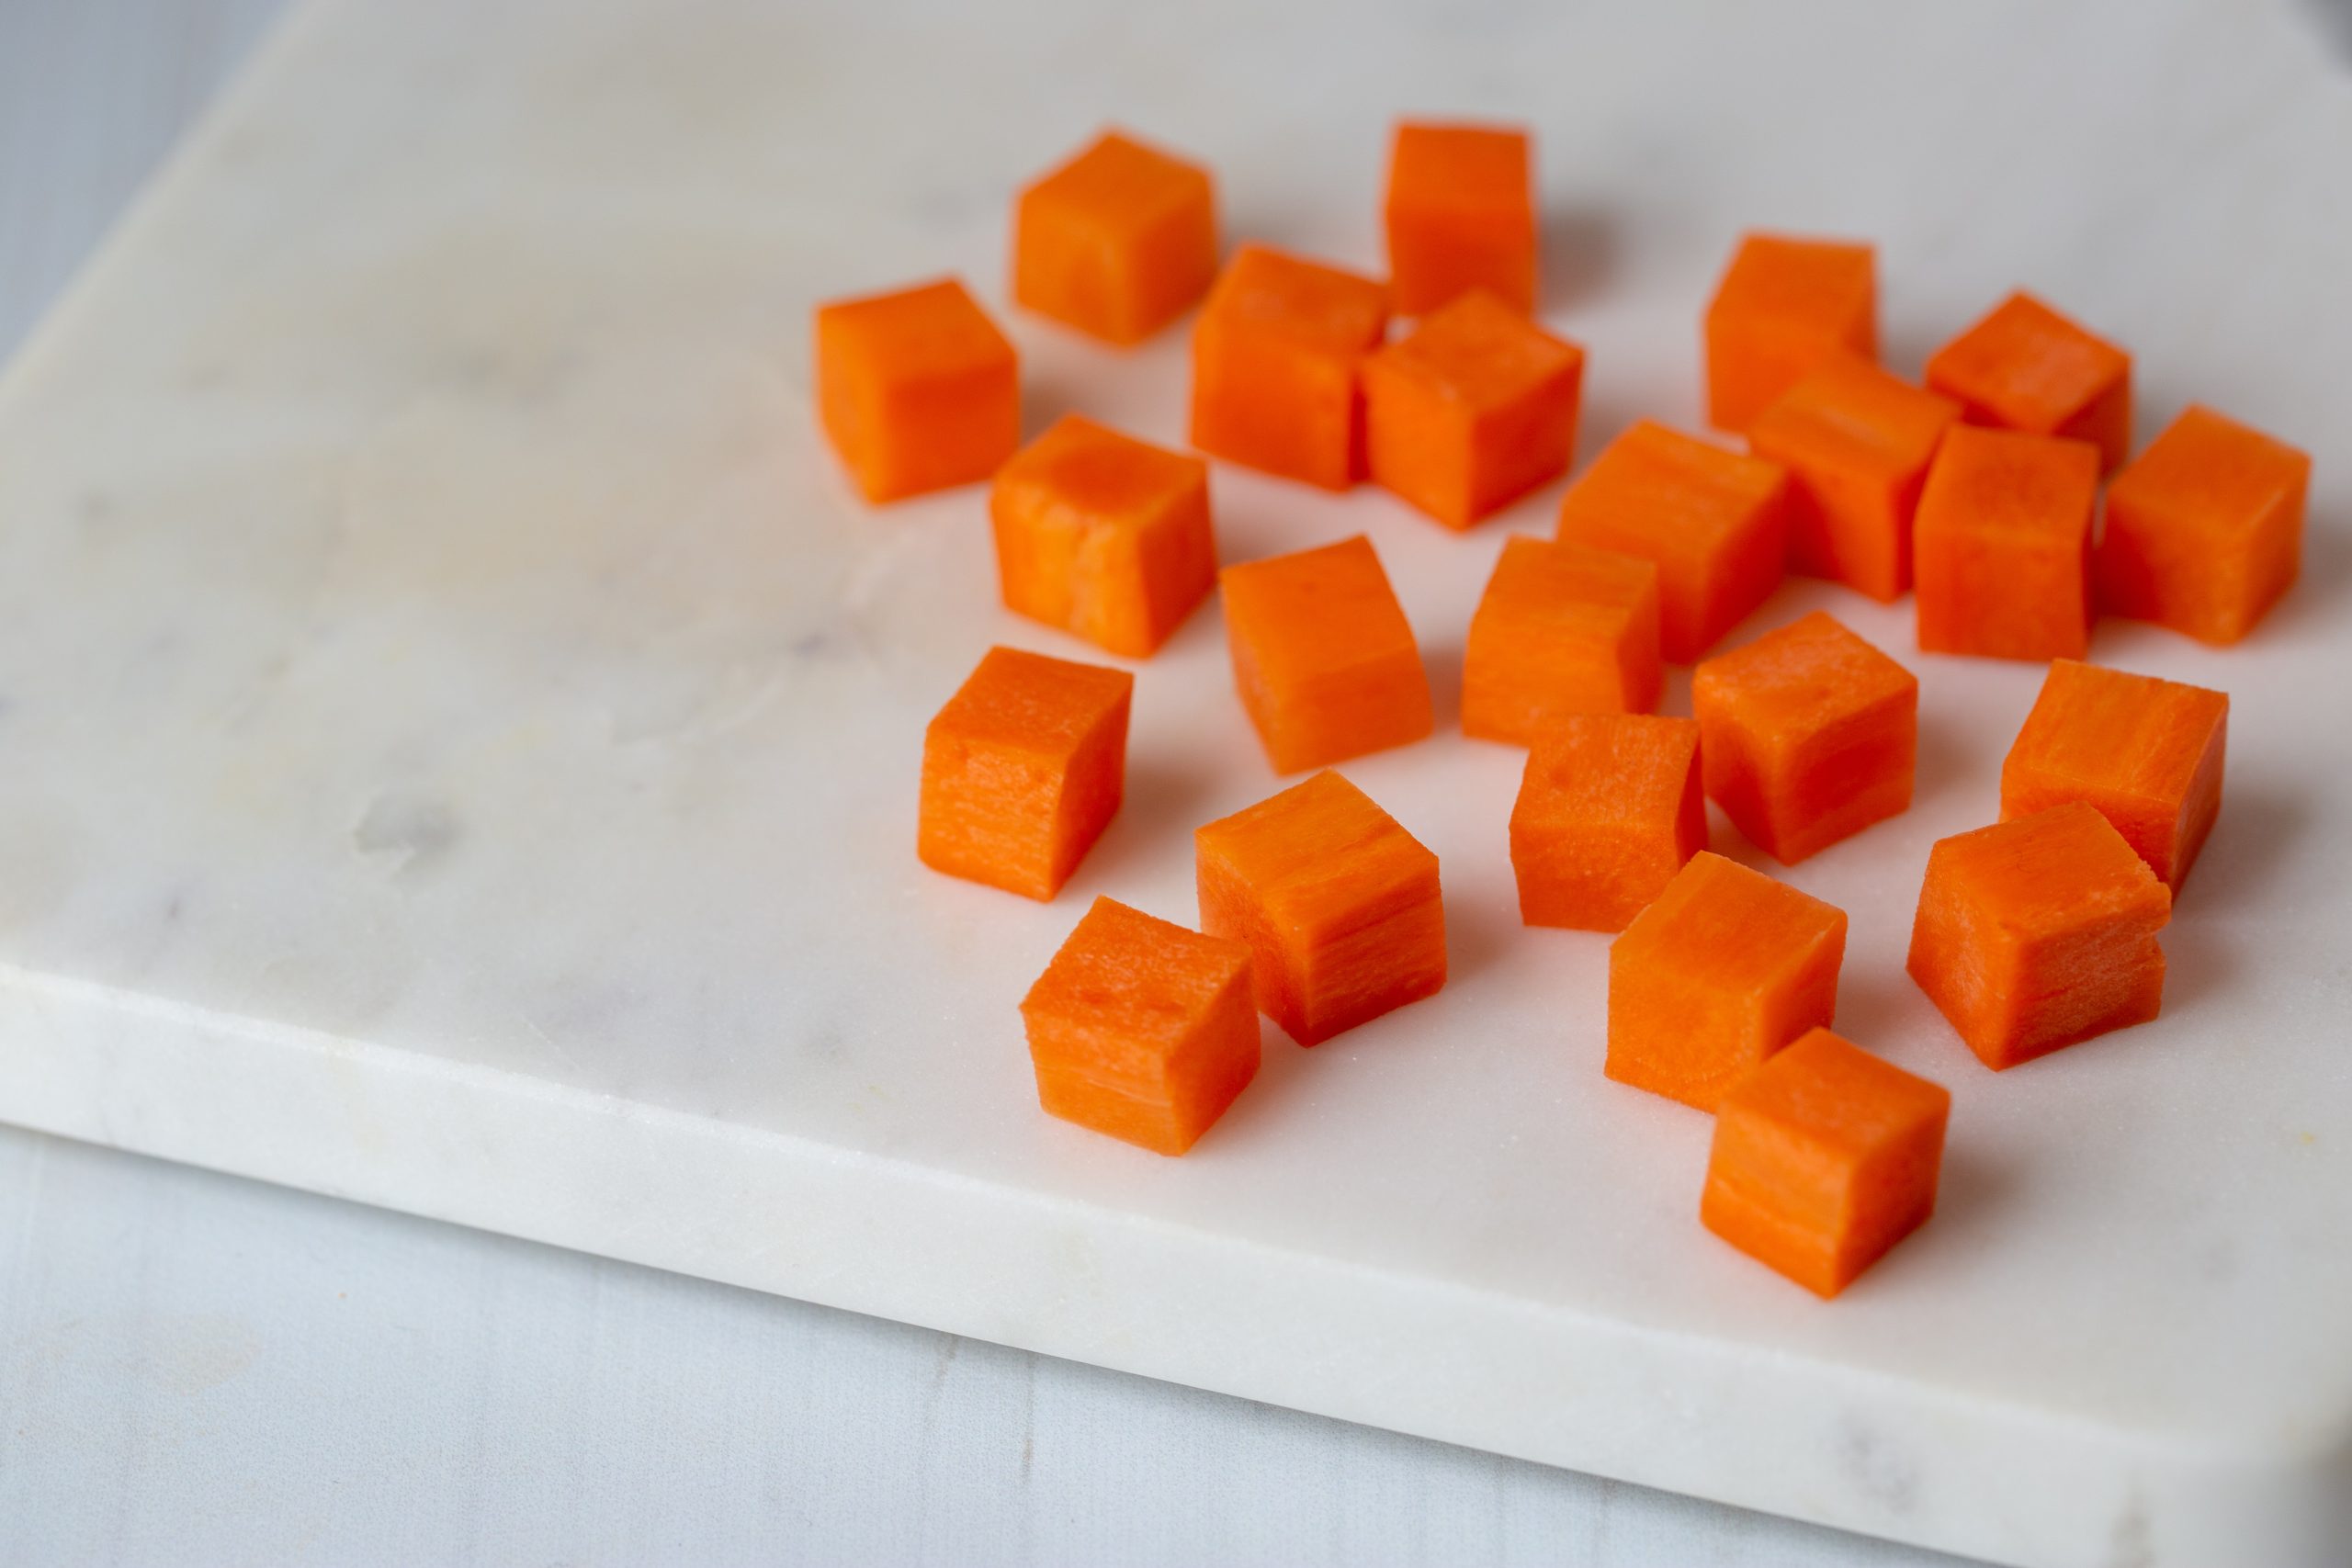 diced carrots | knife cuts